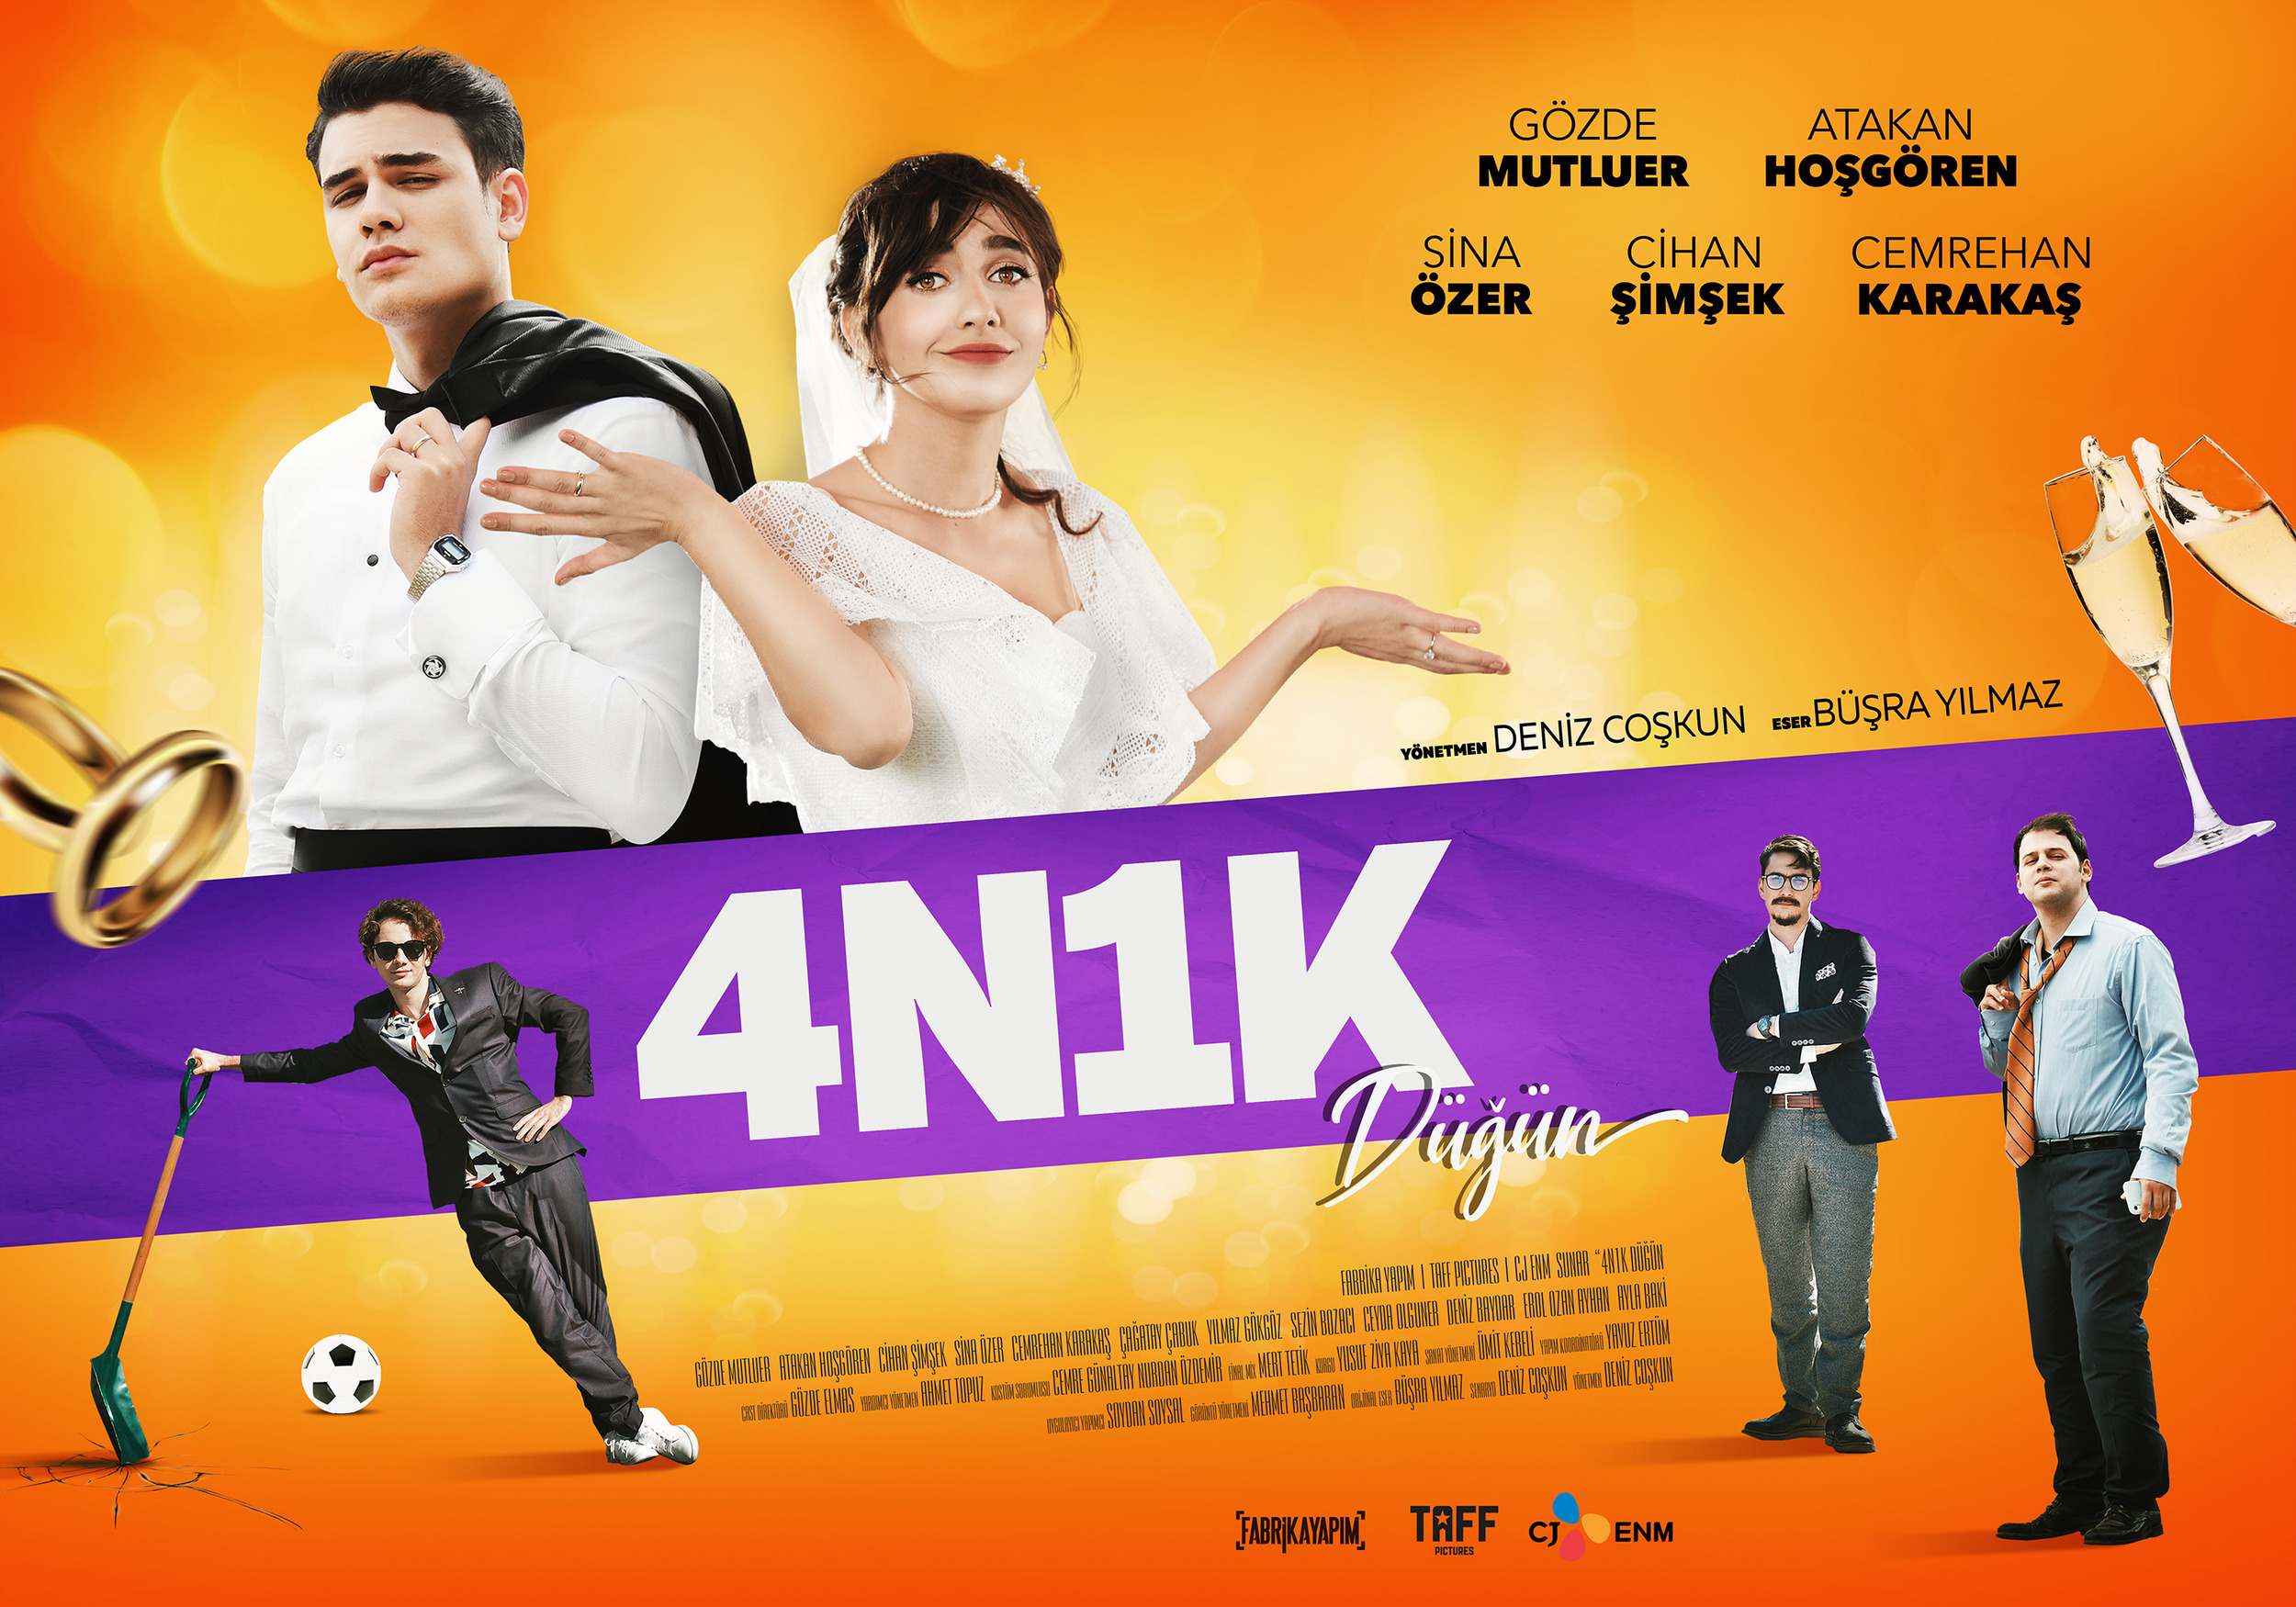 Mega Sized Movie Poster Image for 4N1K Dügün (#2 of 2)